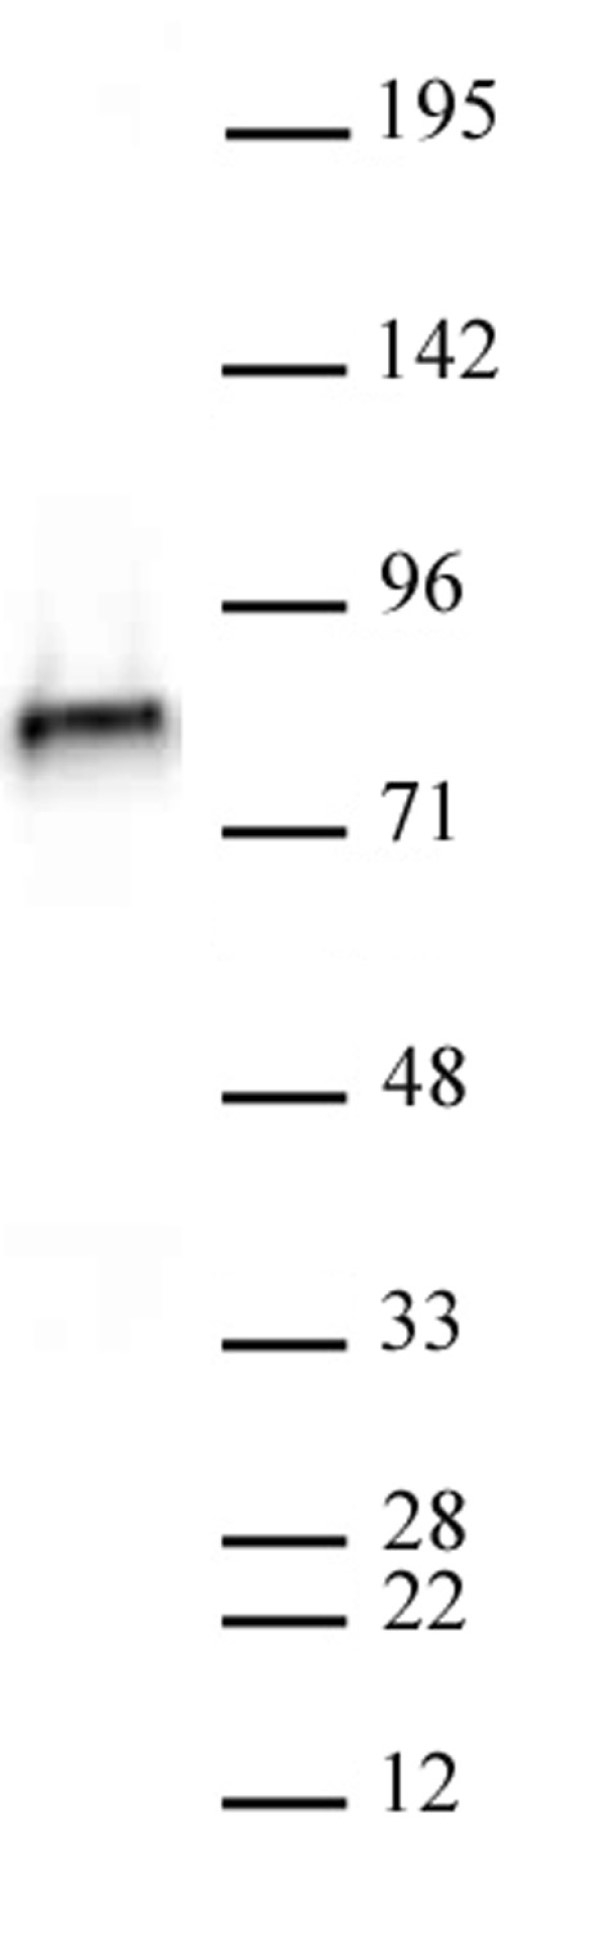 Anti Human NCAPH2 Antibody, clone 5F2G4 gallery image 2